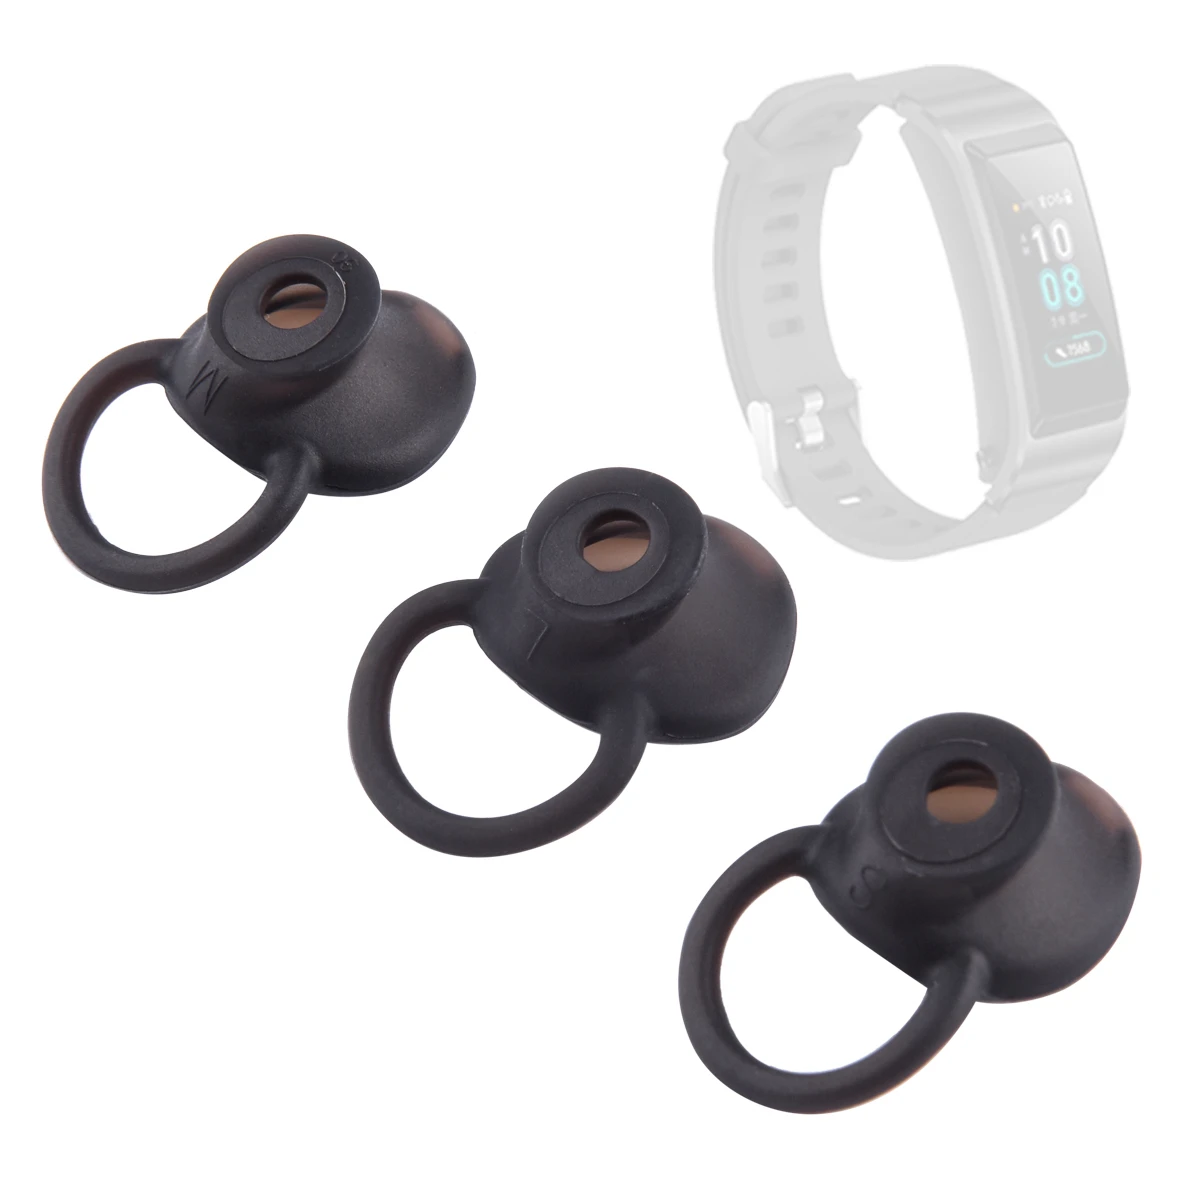 

3pcs Silicone Ear Tips for HUAWEI B5 TalkBand Eartips Smart Bracelet Ear Hook Bluetooth Headset Tips Earbuds Avoid Falling Off